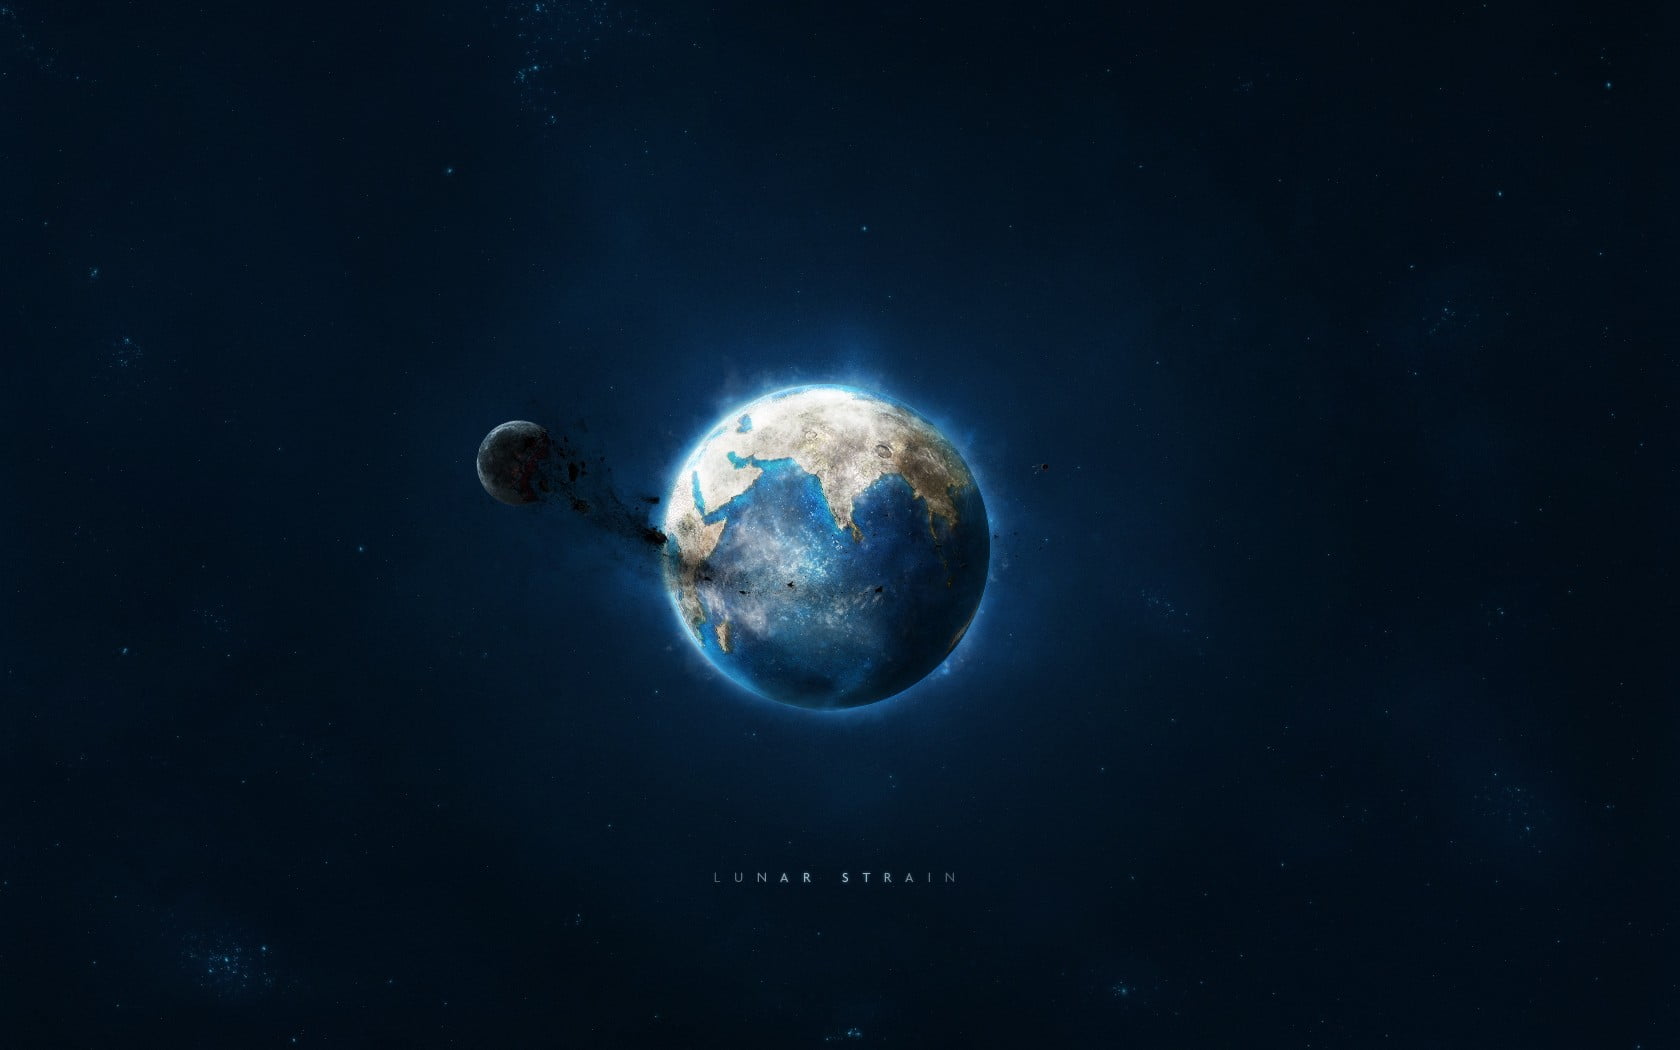 online-crop-planet-earth-wallpaper-lunar-strain-space-planet